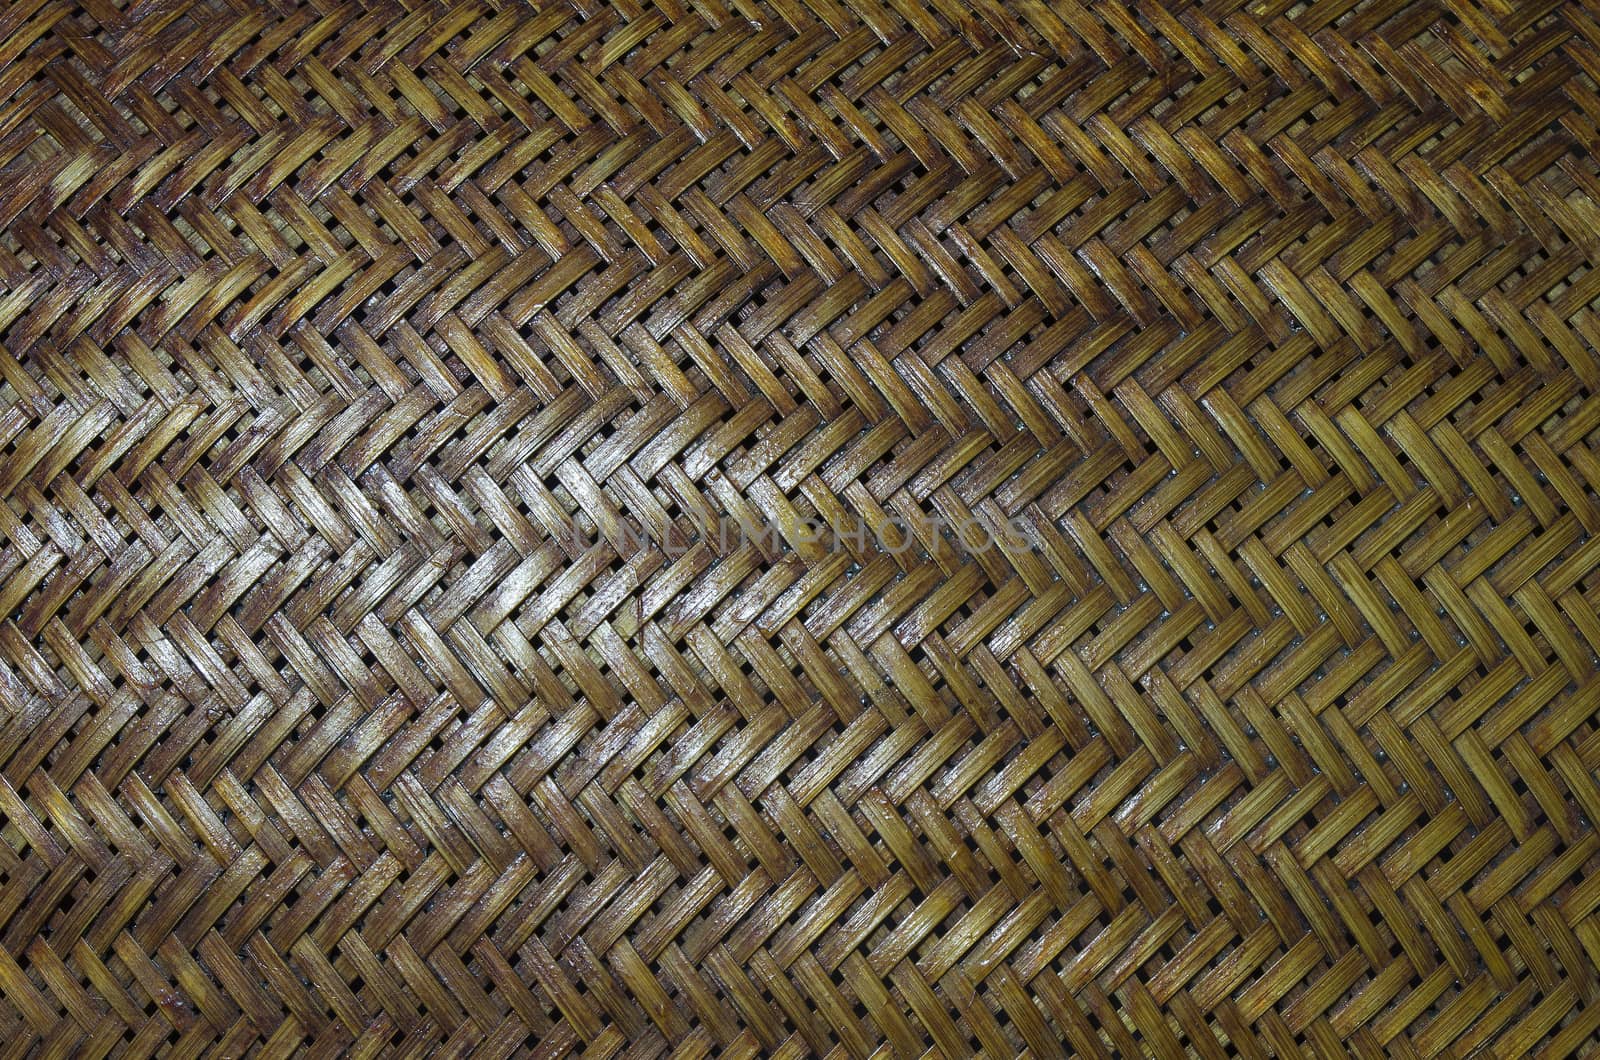 Bamboo Handcraft Work by kobfujar